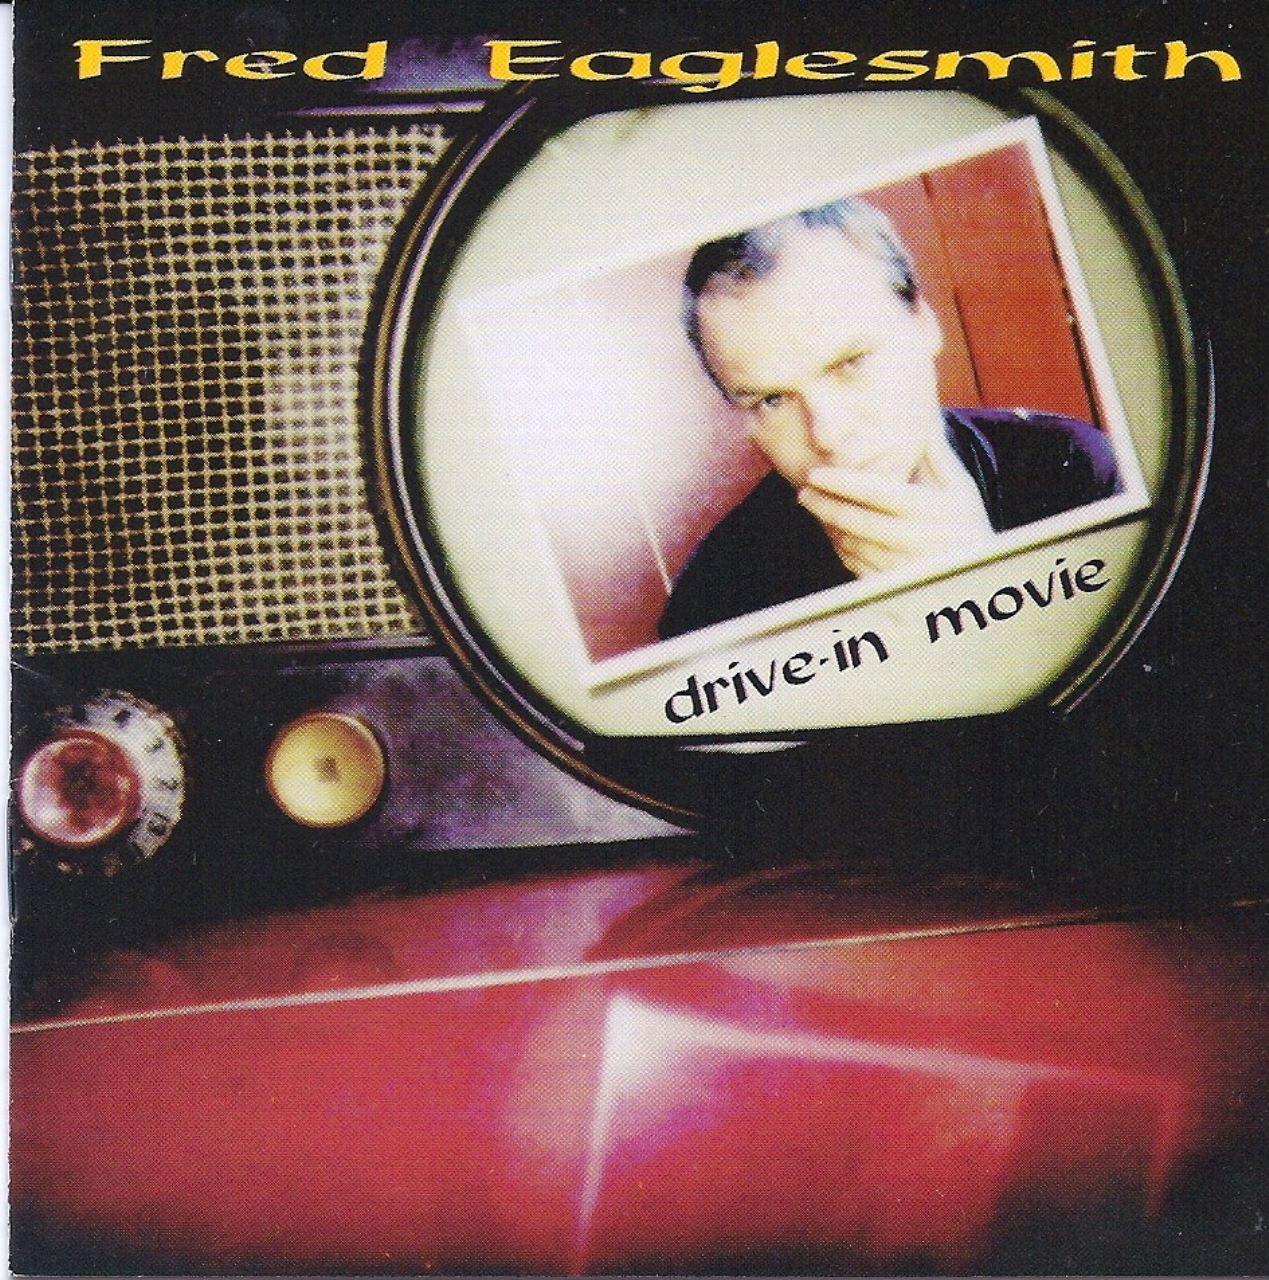 Fred Eaglesmith - Drive-in Movie cover album